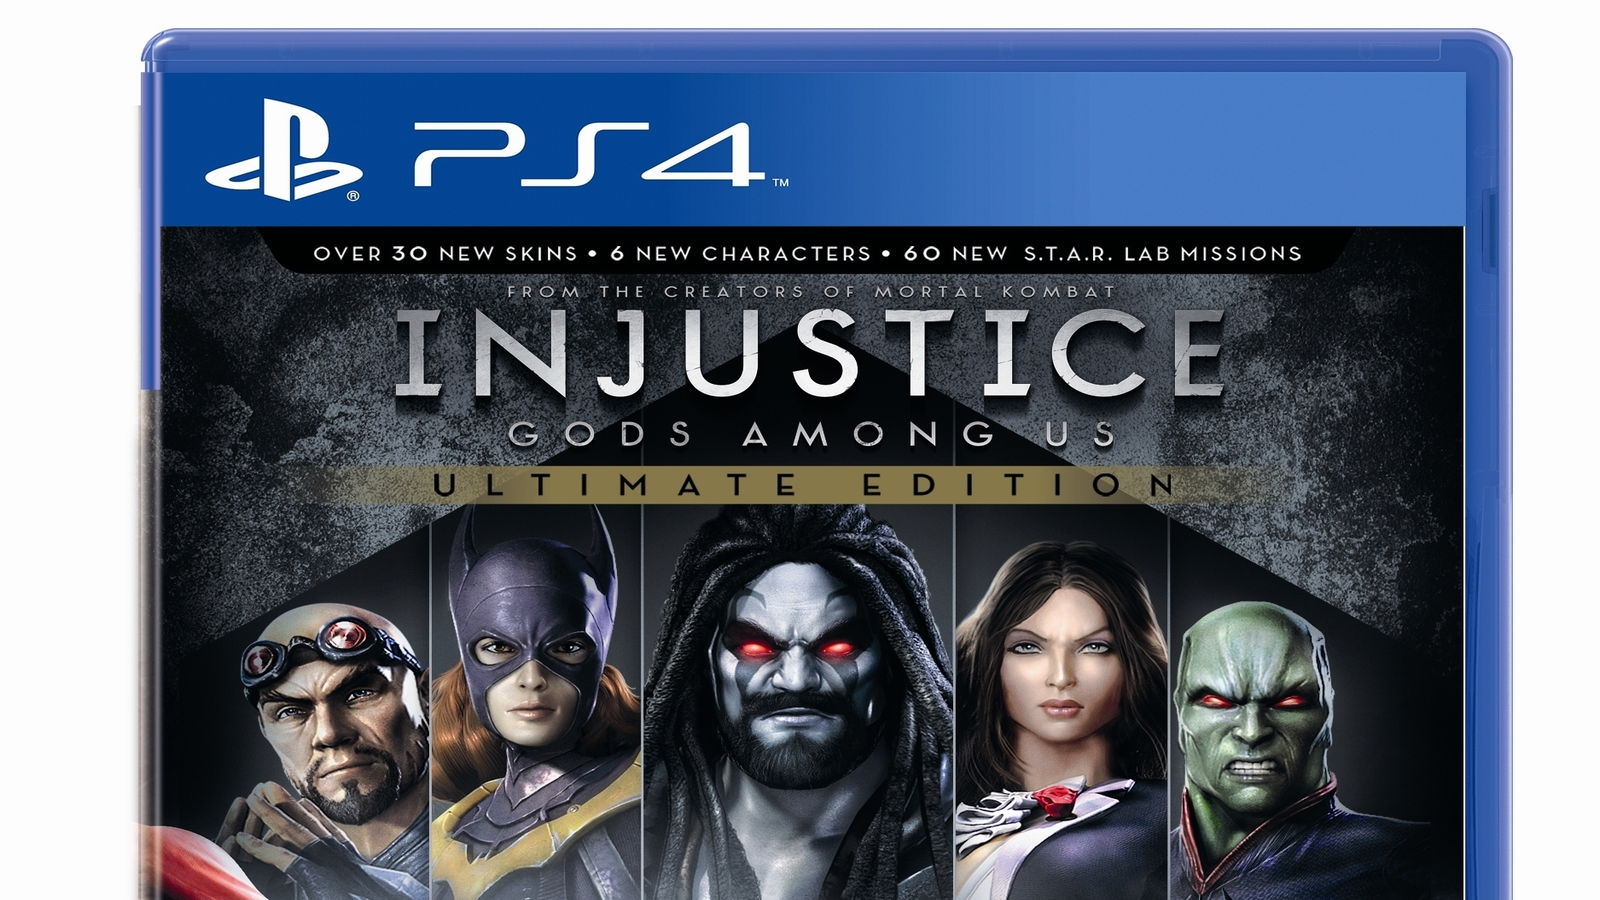 Injustice: Gods Among Us - Nintendo Wii U, Nintendo Wii U